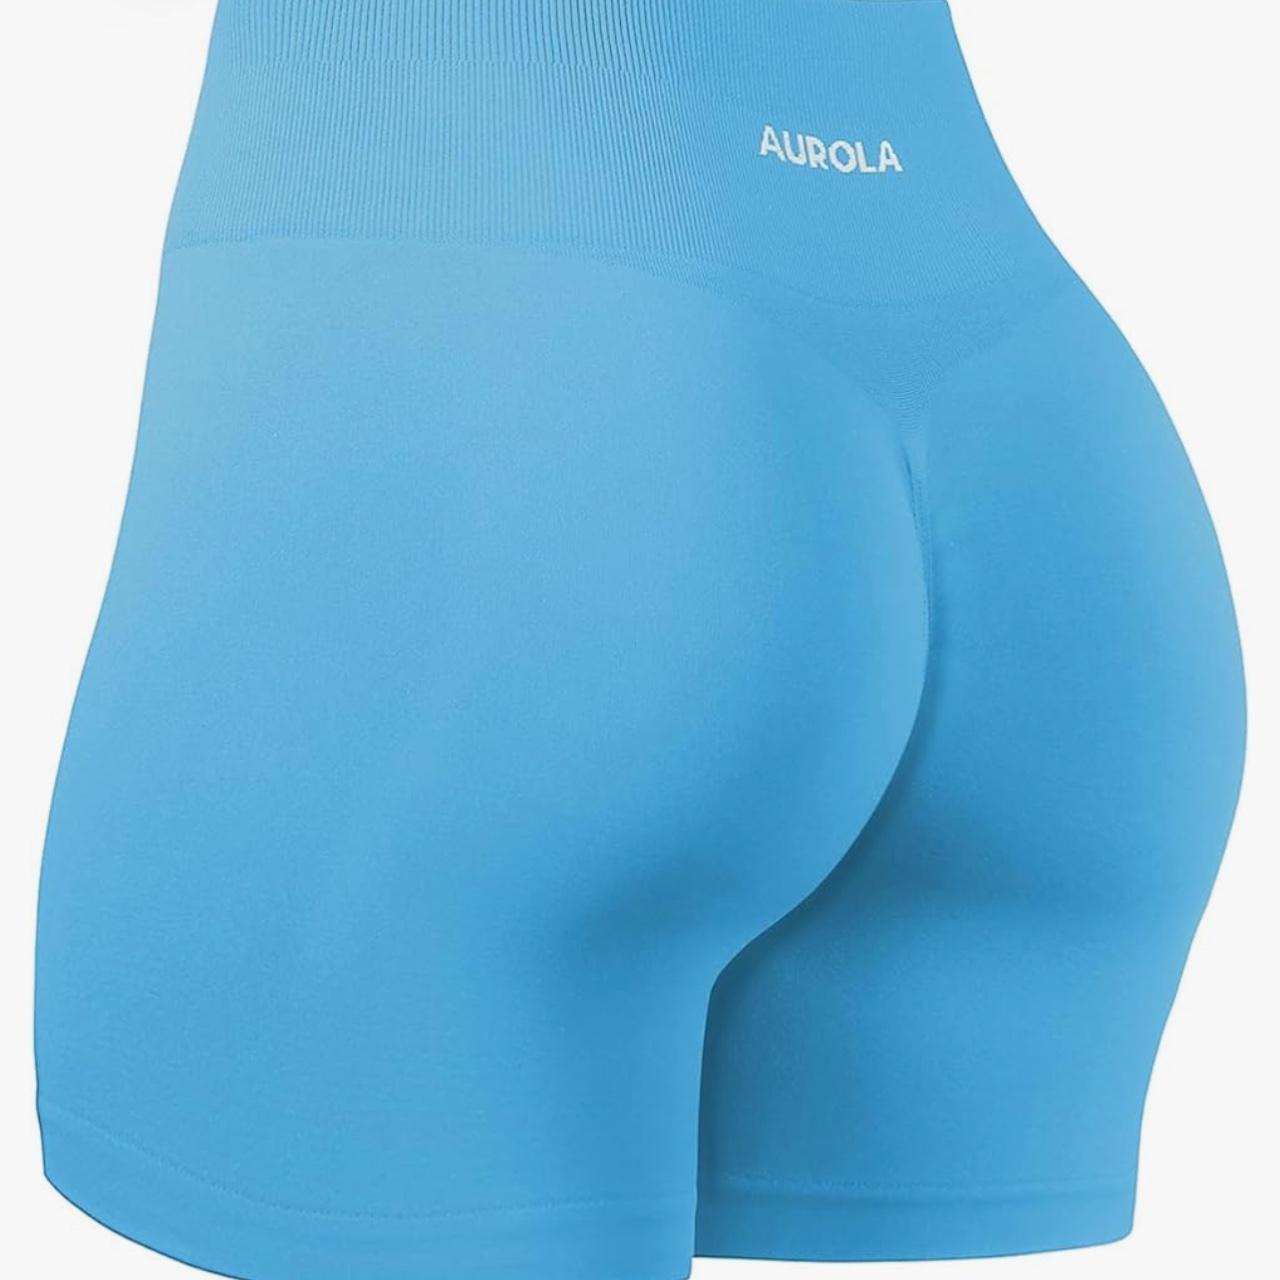 AUROLA Dream Collection Workout Shorts for Women Scrunch